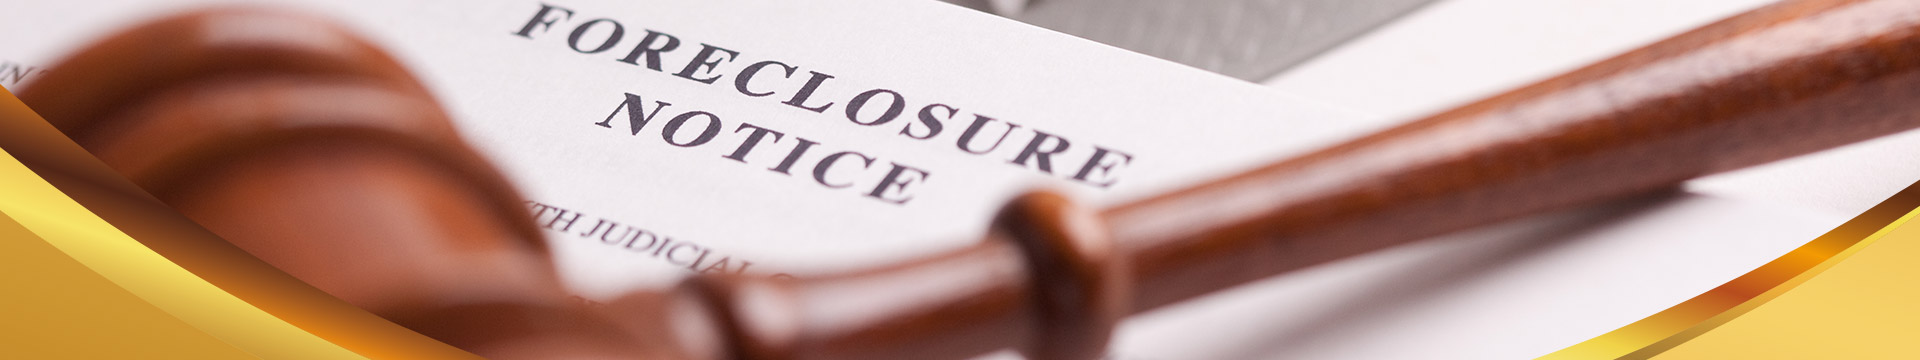 foreclosure defense and loan modification attorneys